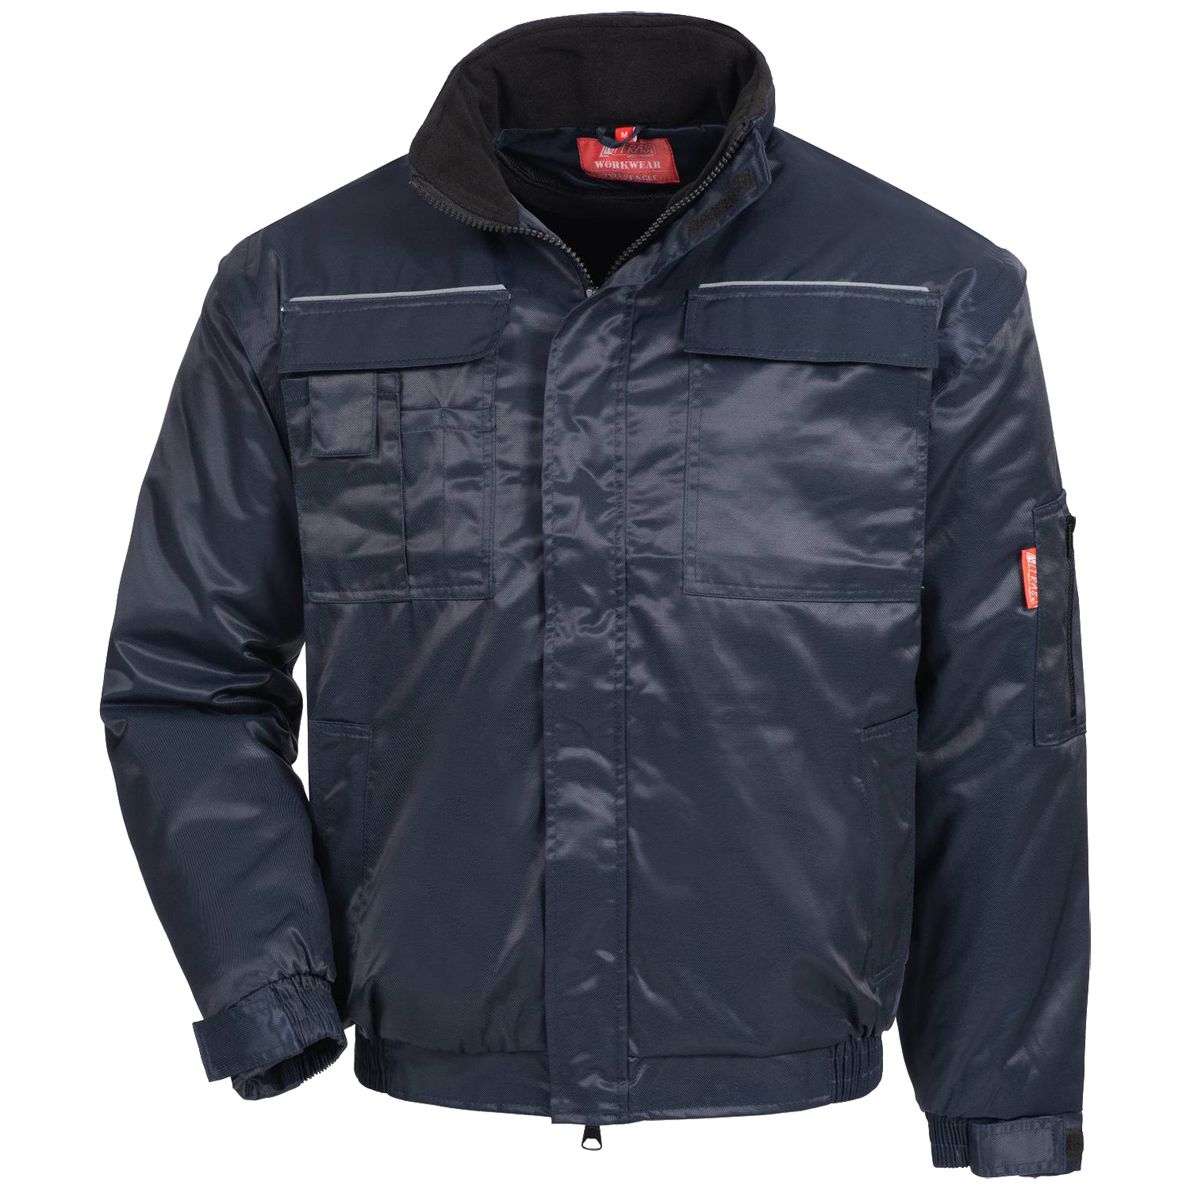 NITRAS MOTION TEX PLUS 7121 weather jacket - windproof jacket for work - dark blue - L